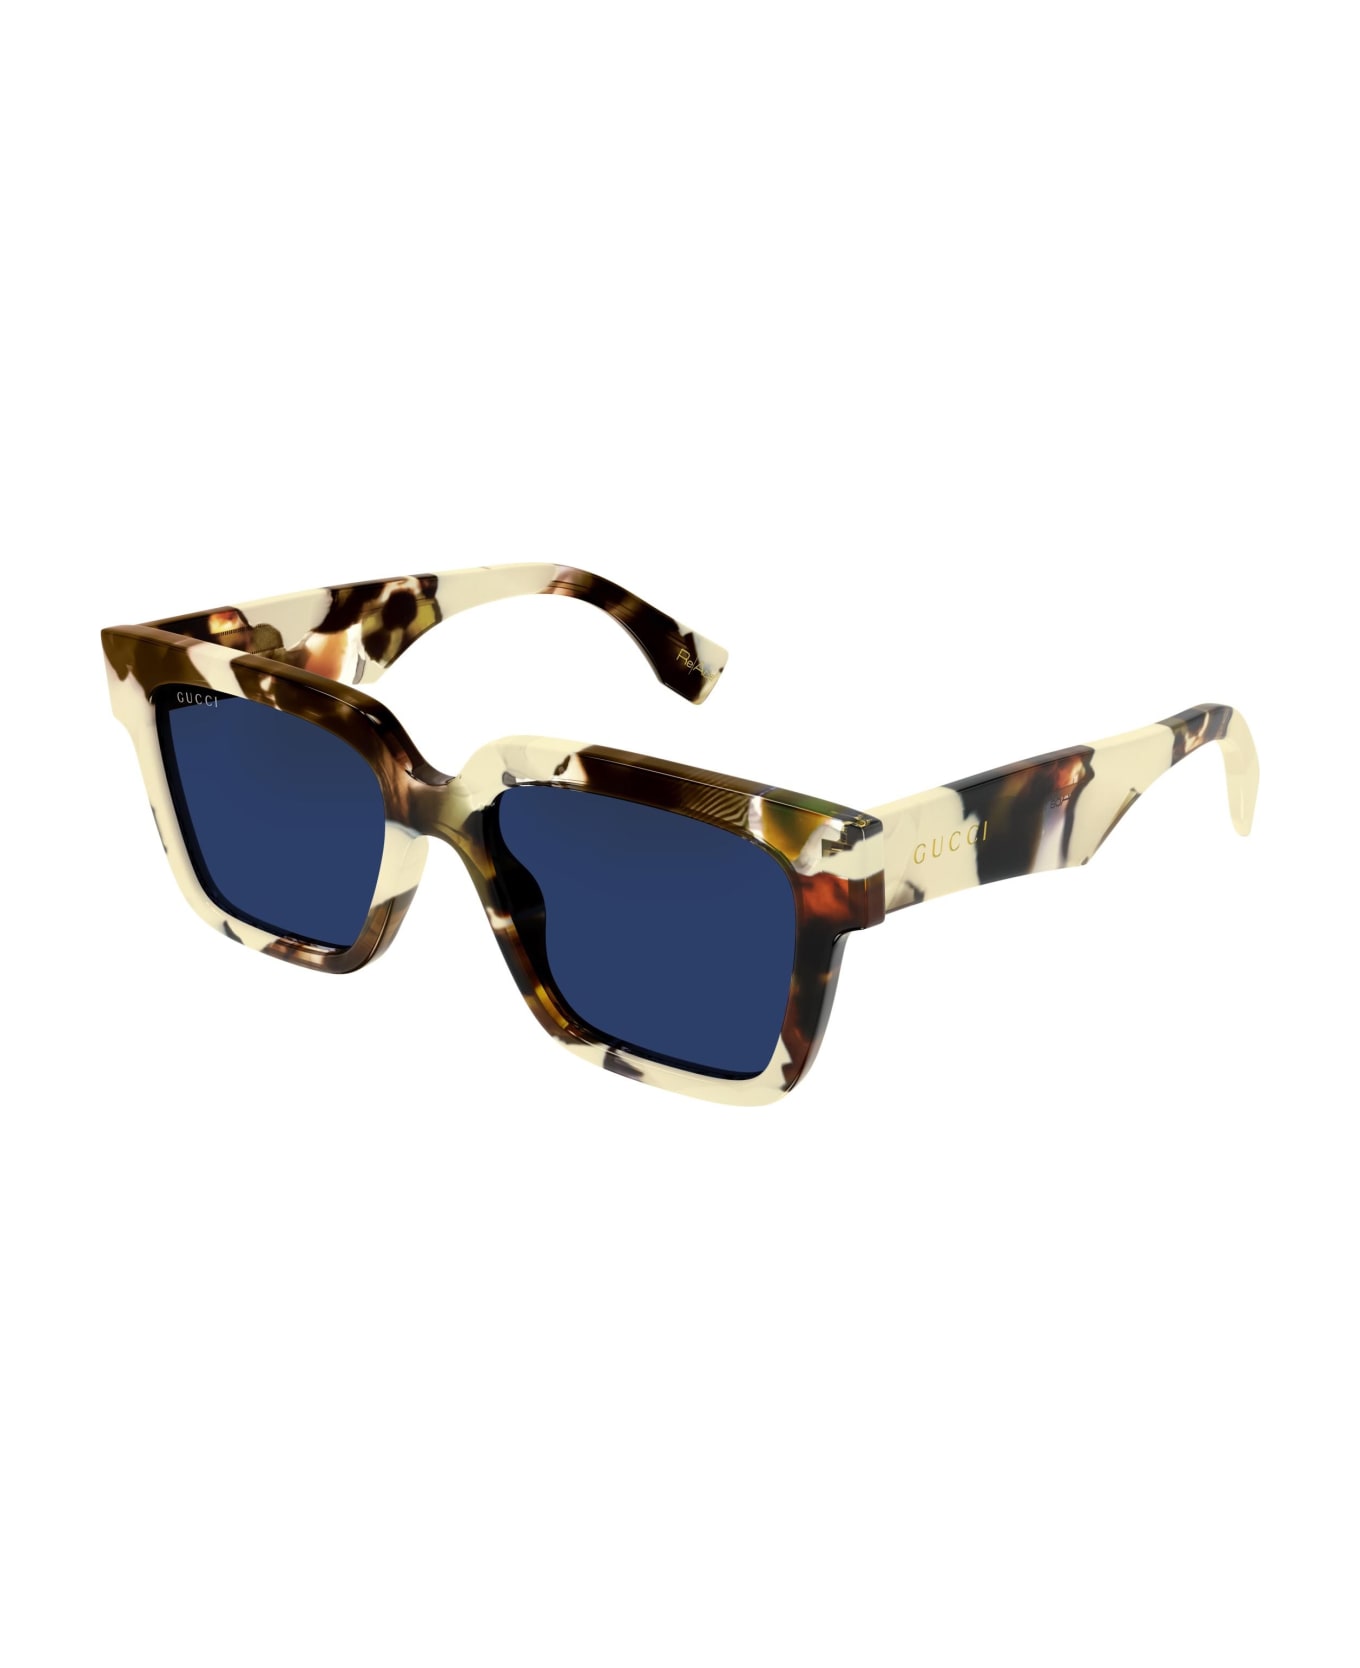 Gucci Eyewear Sunglasses - Havana chiaro/Blu サングラス